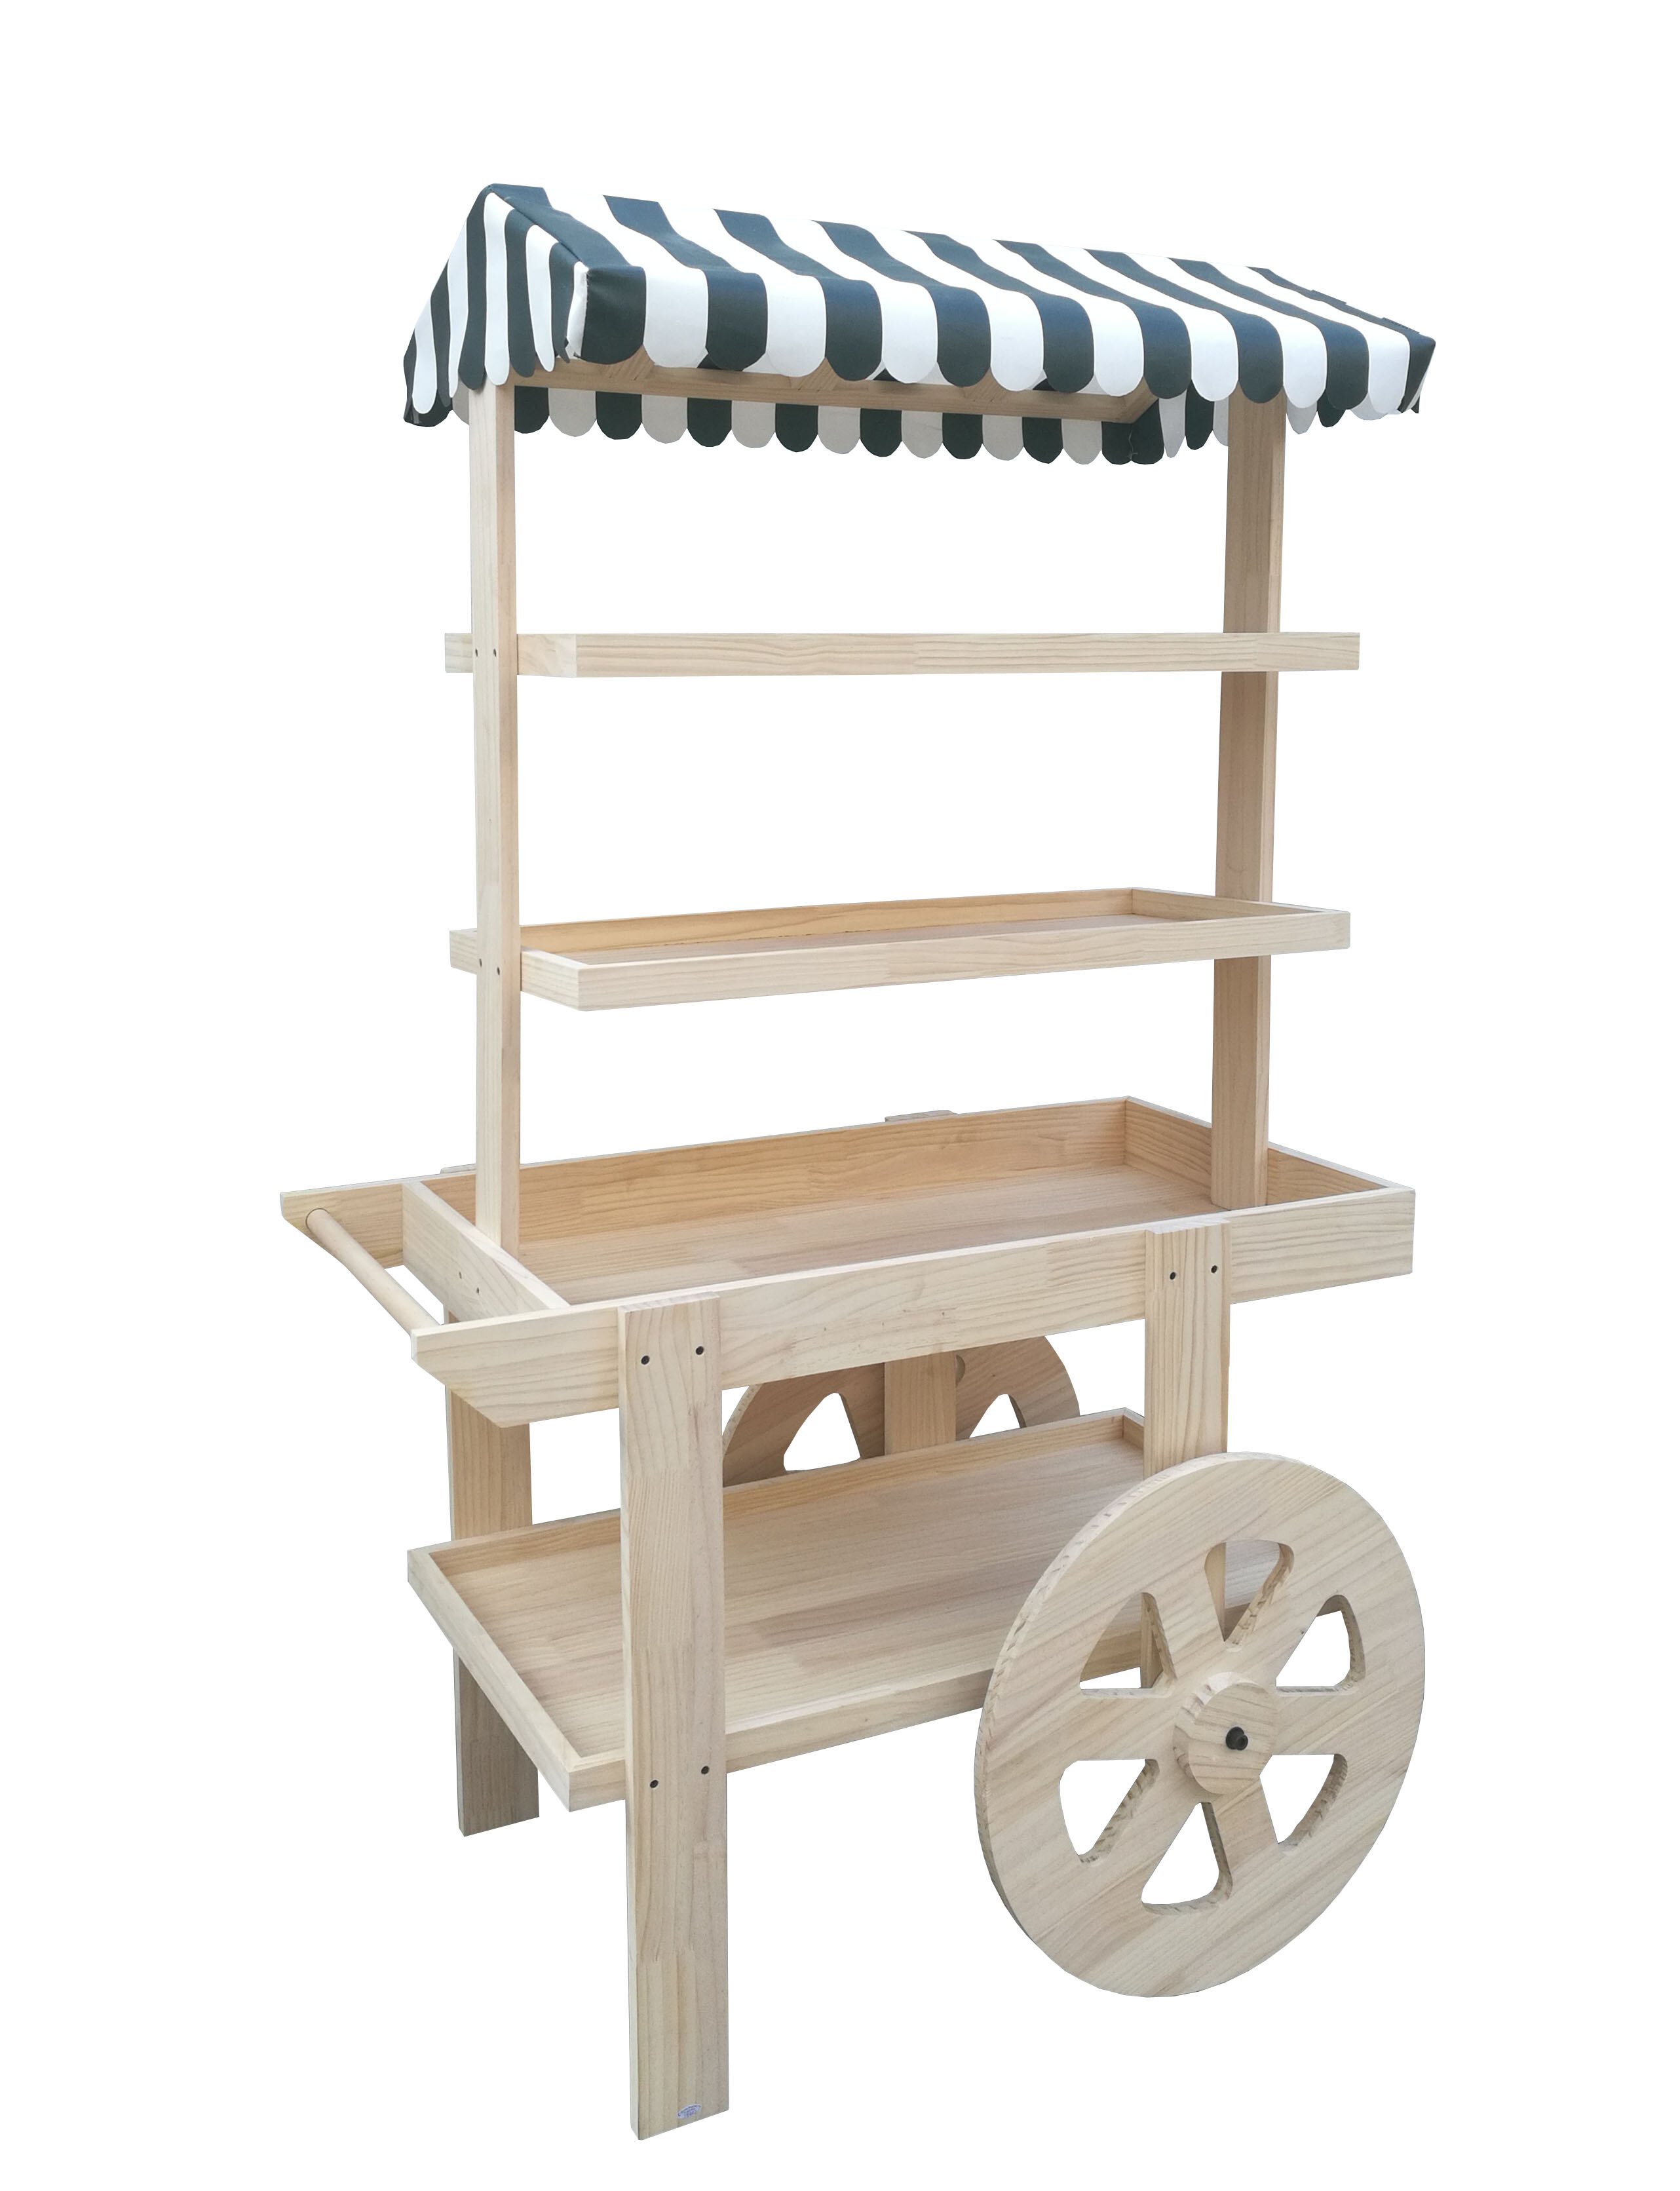 Details about   Flower Cart vending market fair wagon wood stall stand rolling shelf boothkiosk 